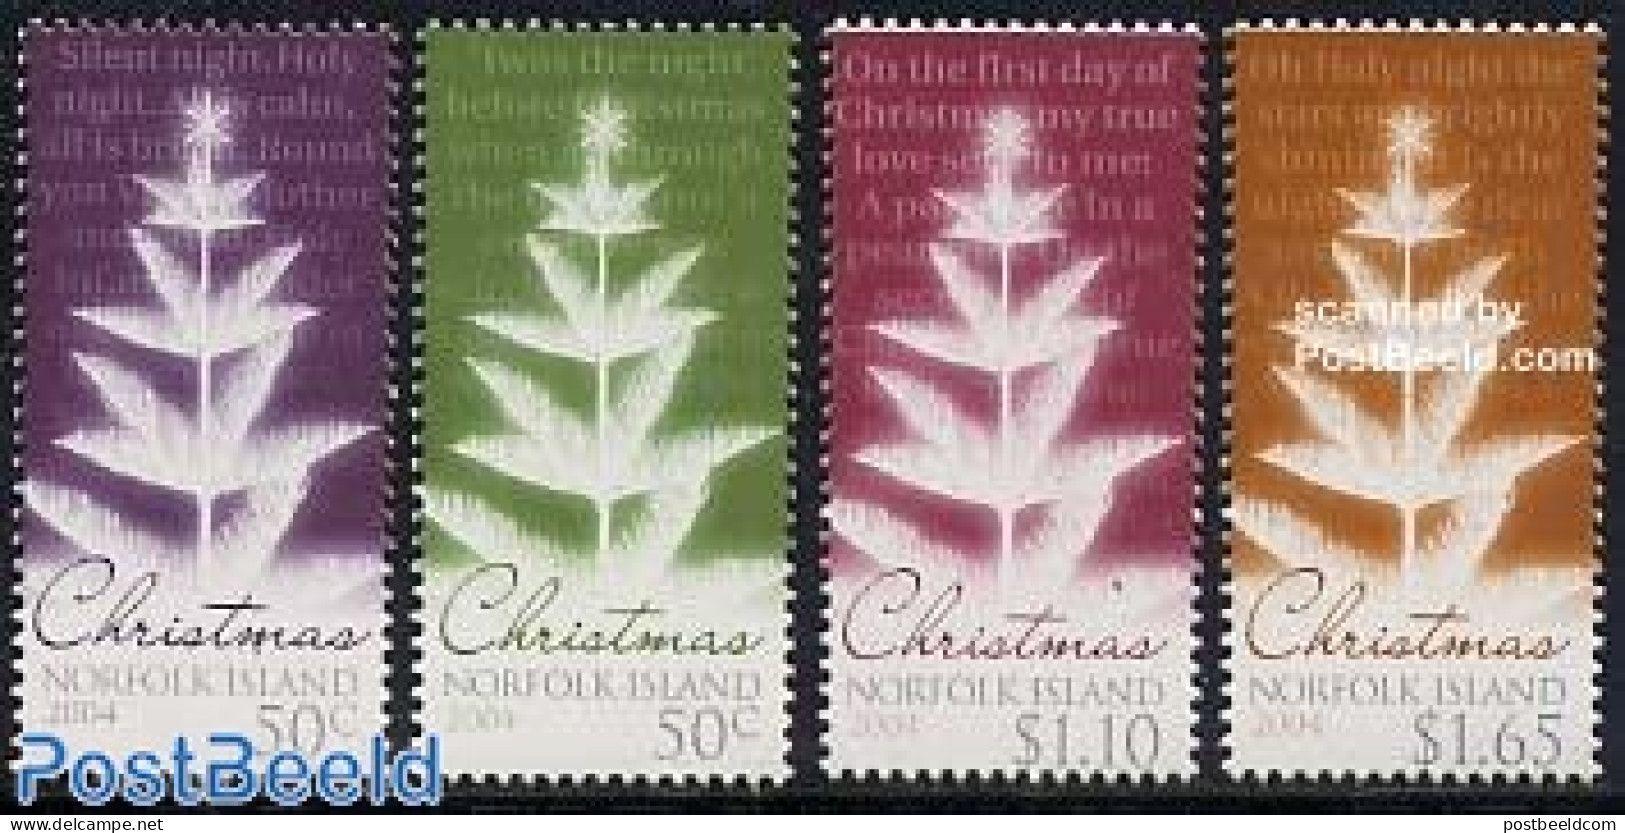 Norfolk Island 2004 Christmas 4v, Mint NH, Religion - Christmas - Weihnachten